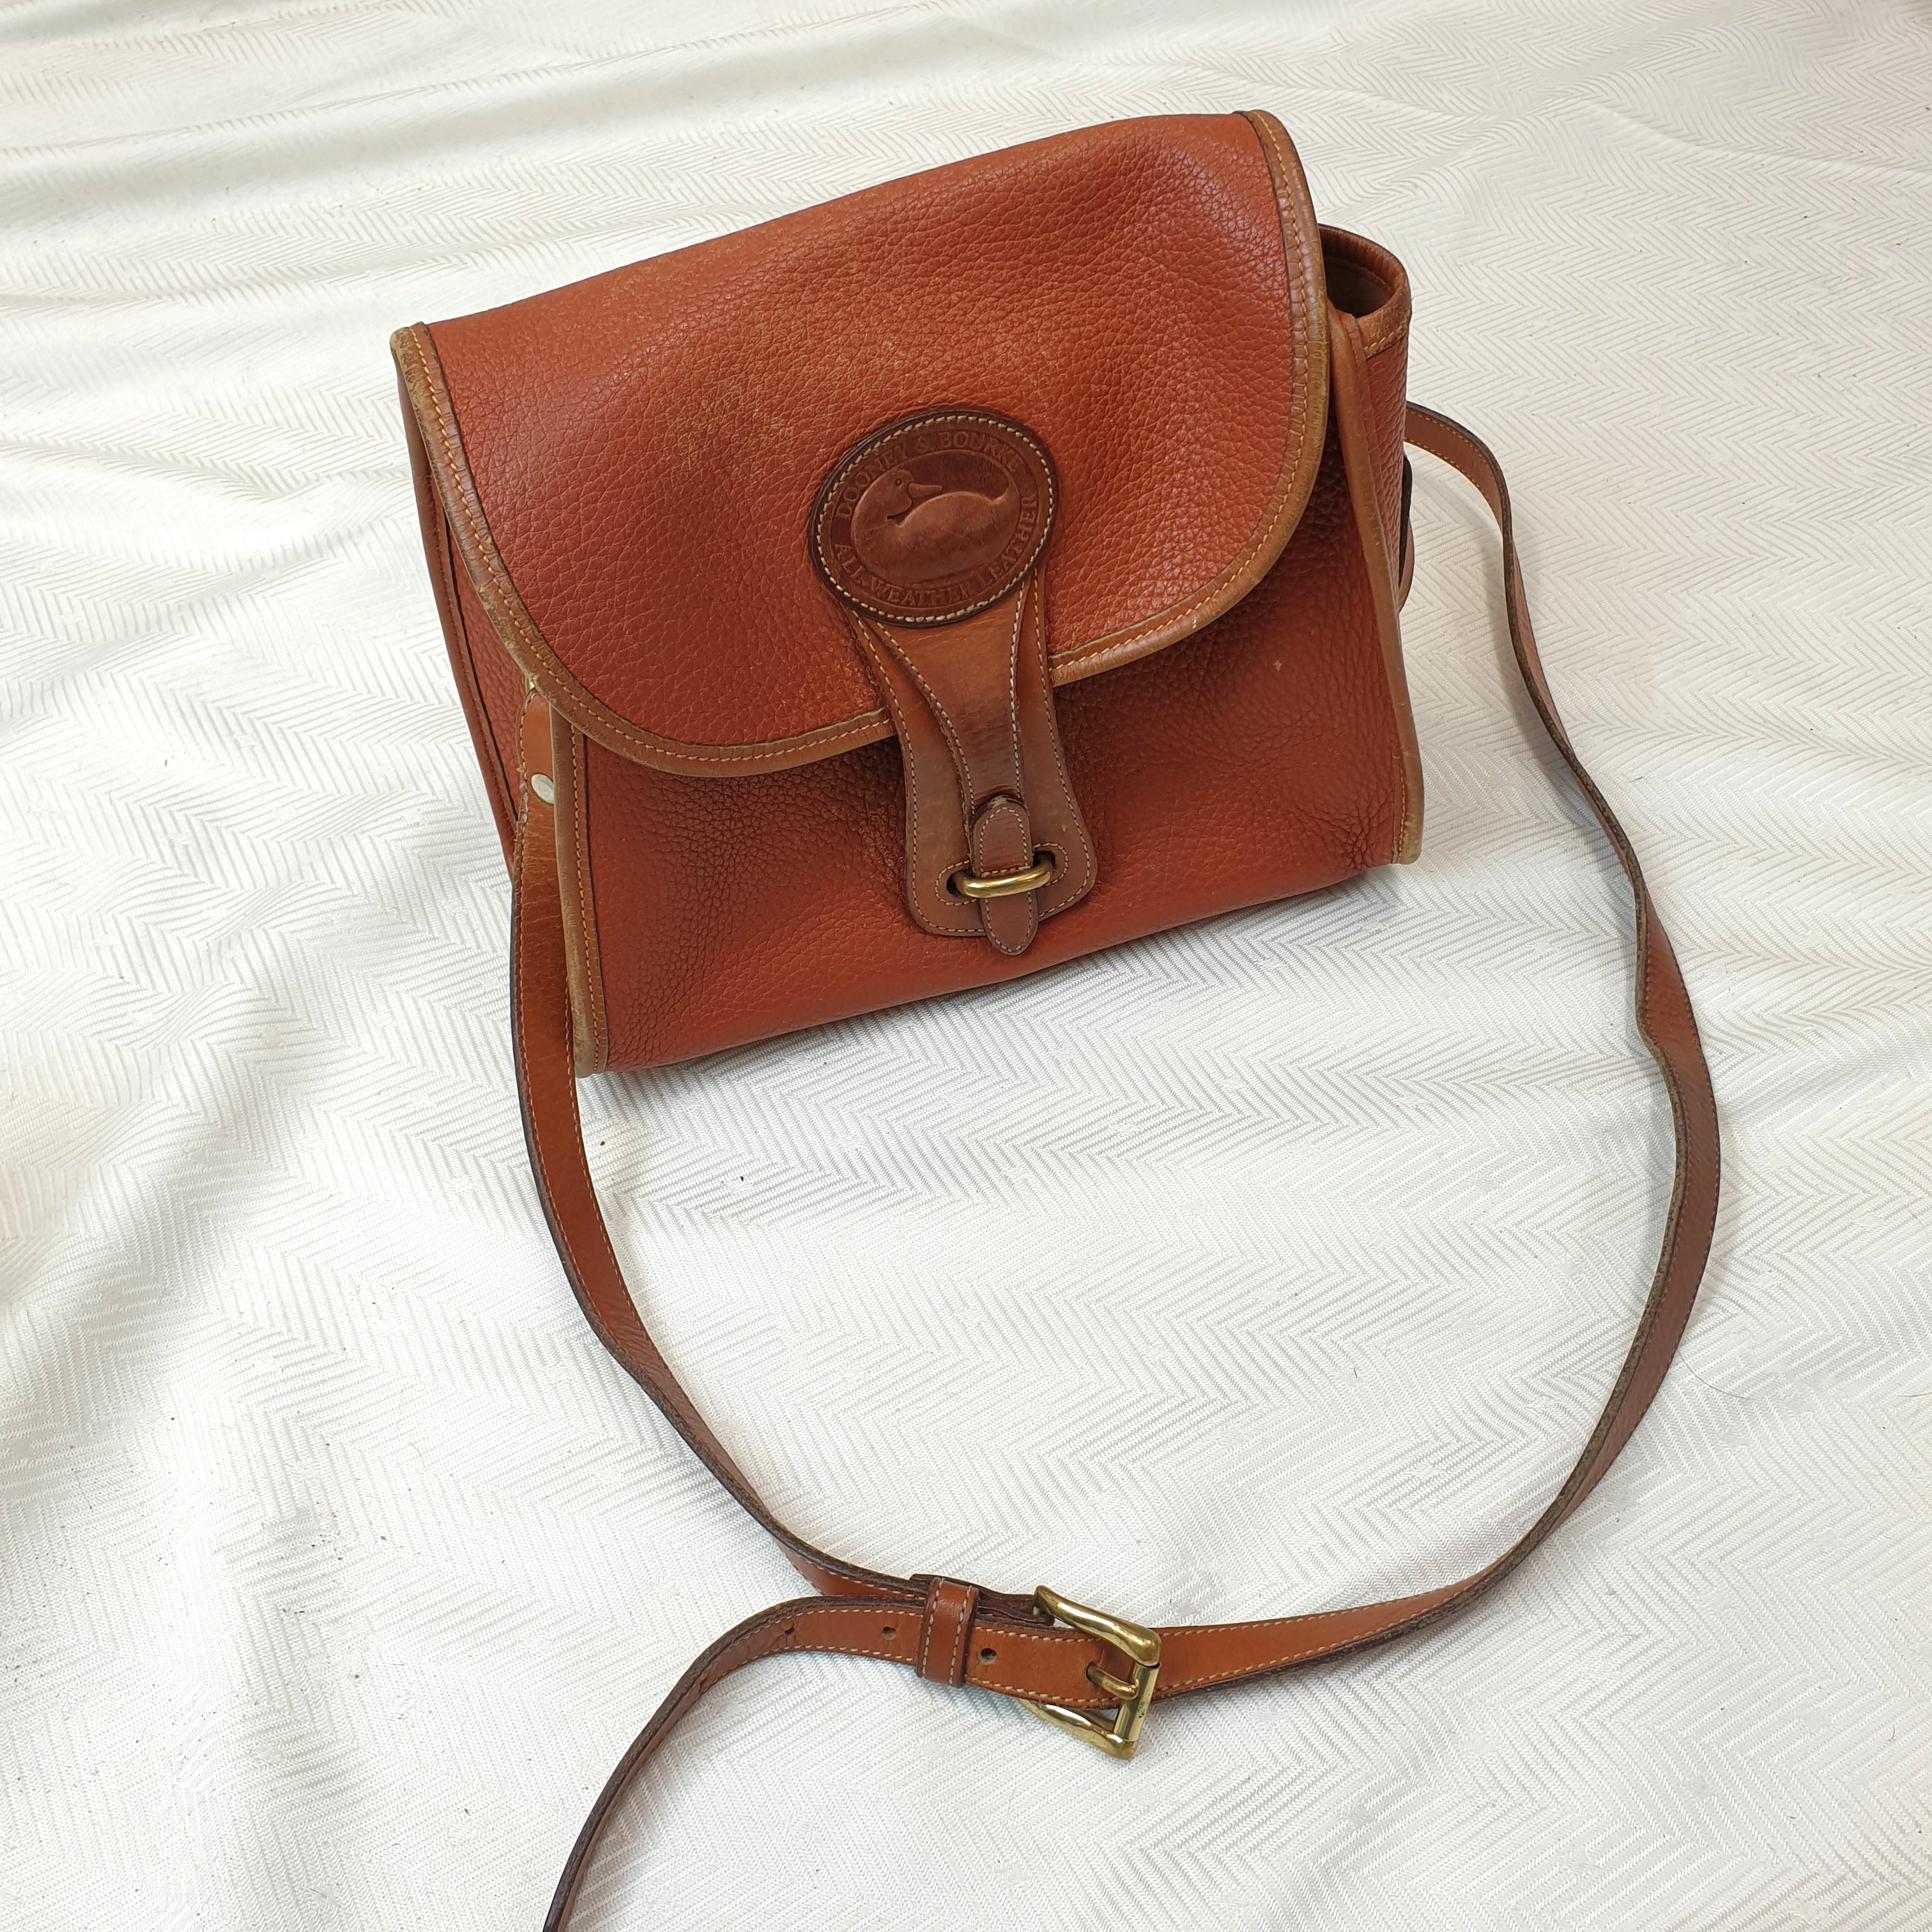 Dooney & Bourke Brown Leather Shoulderbag